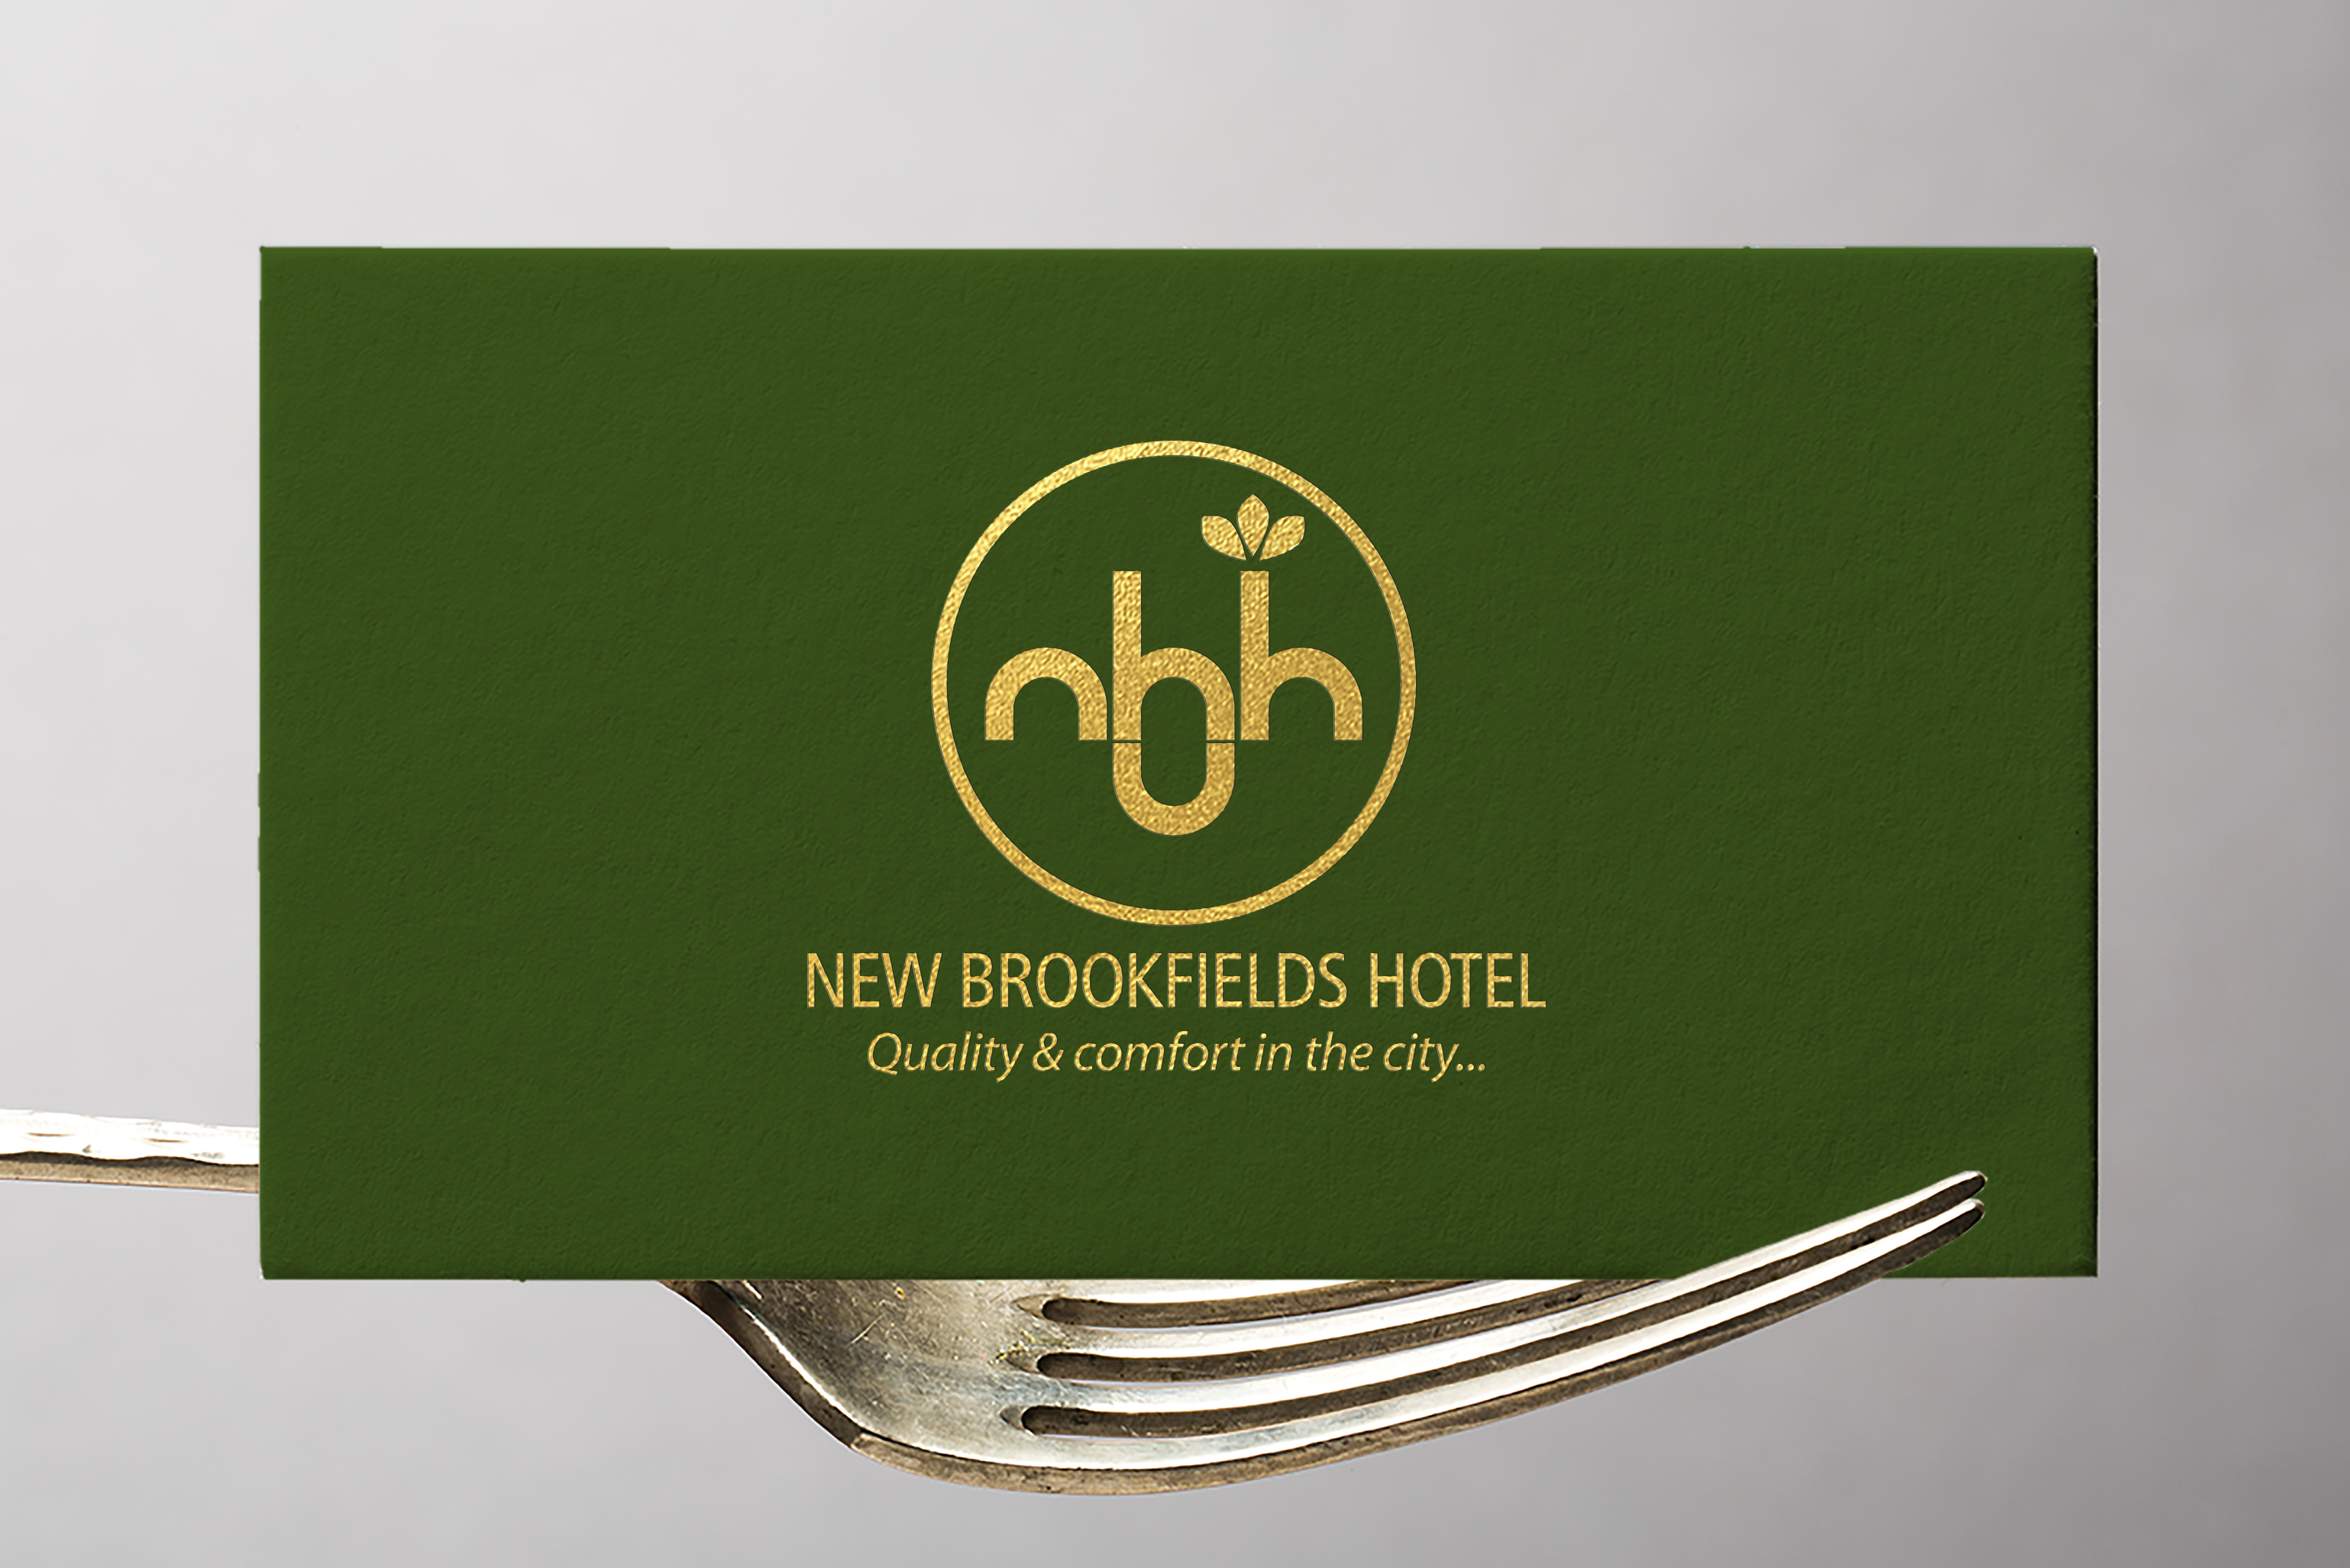 Tbuoy Designs - New brookfields hotel